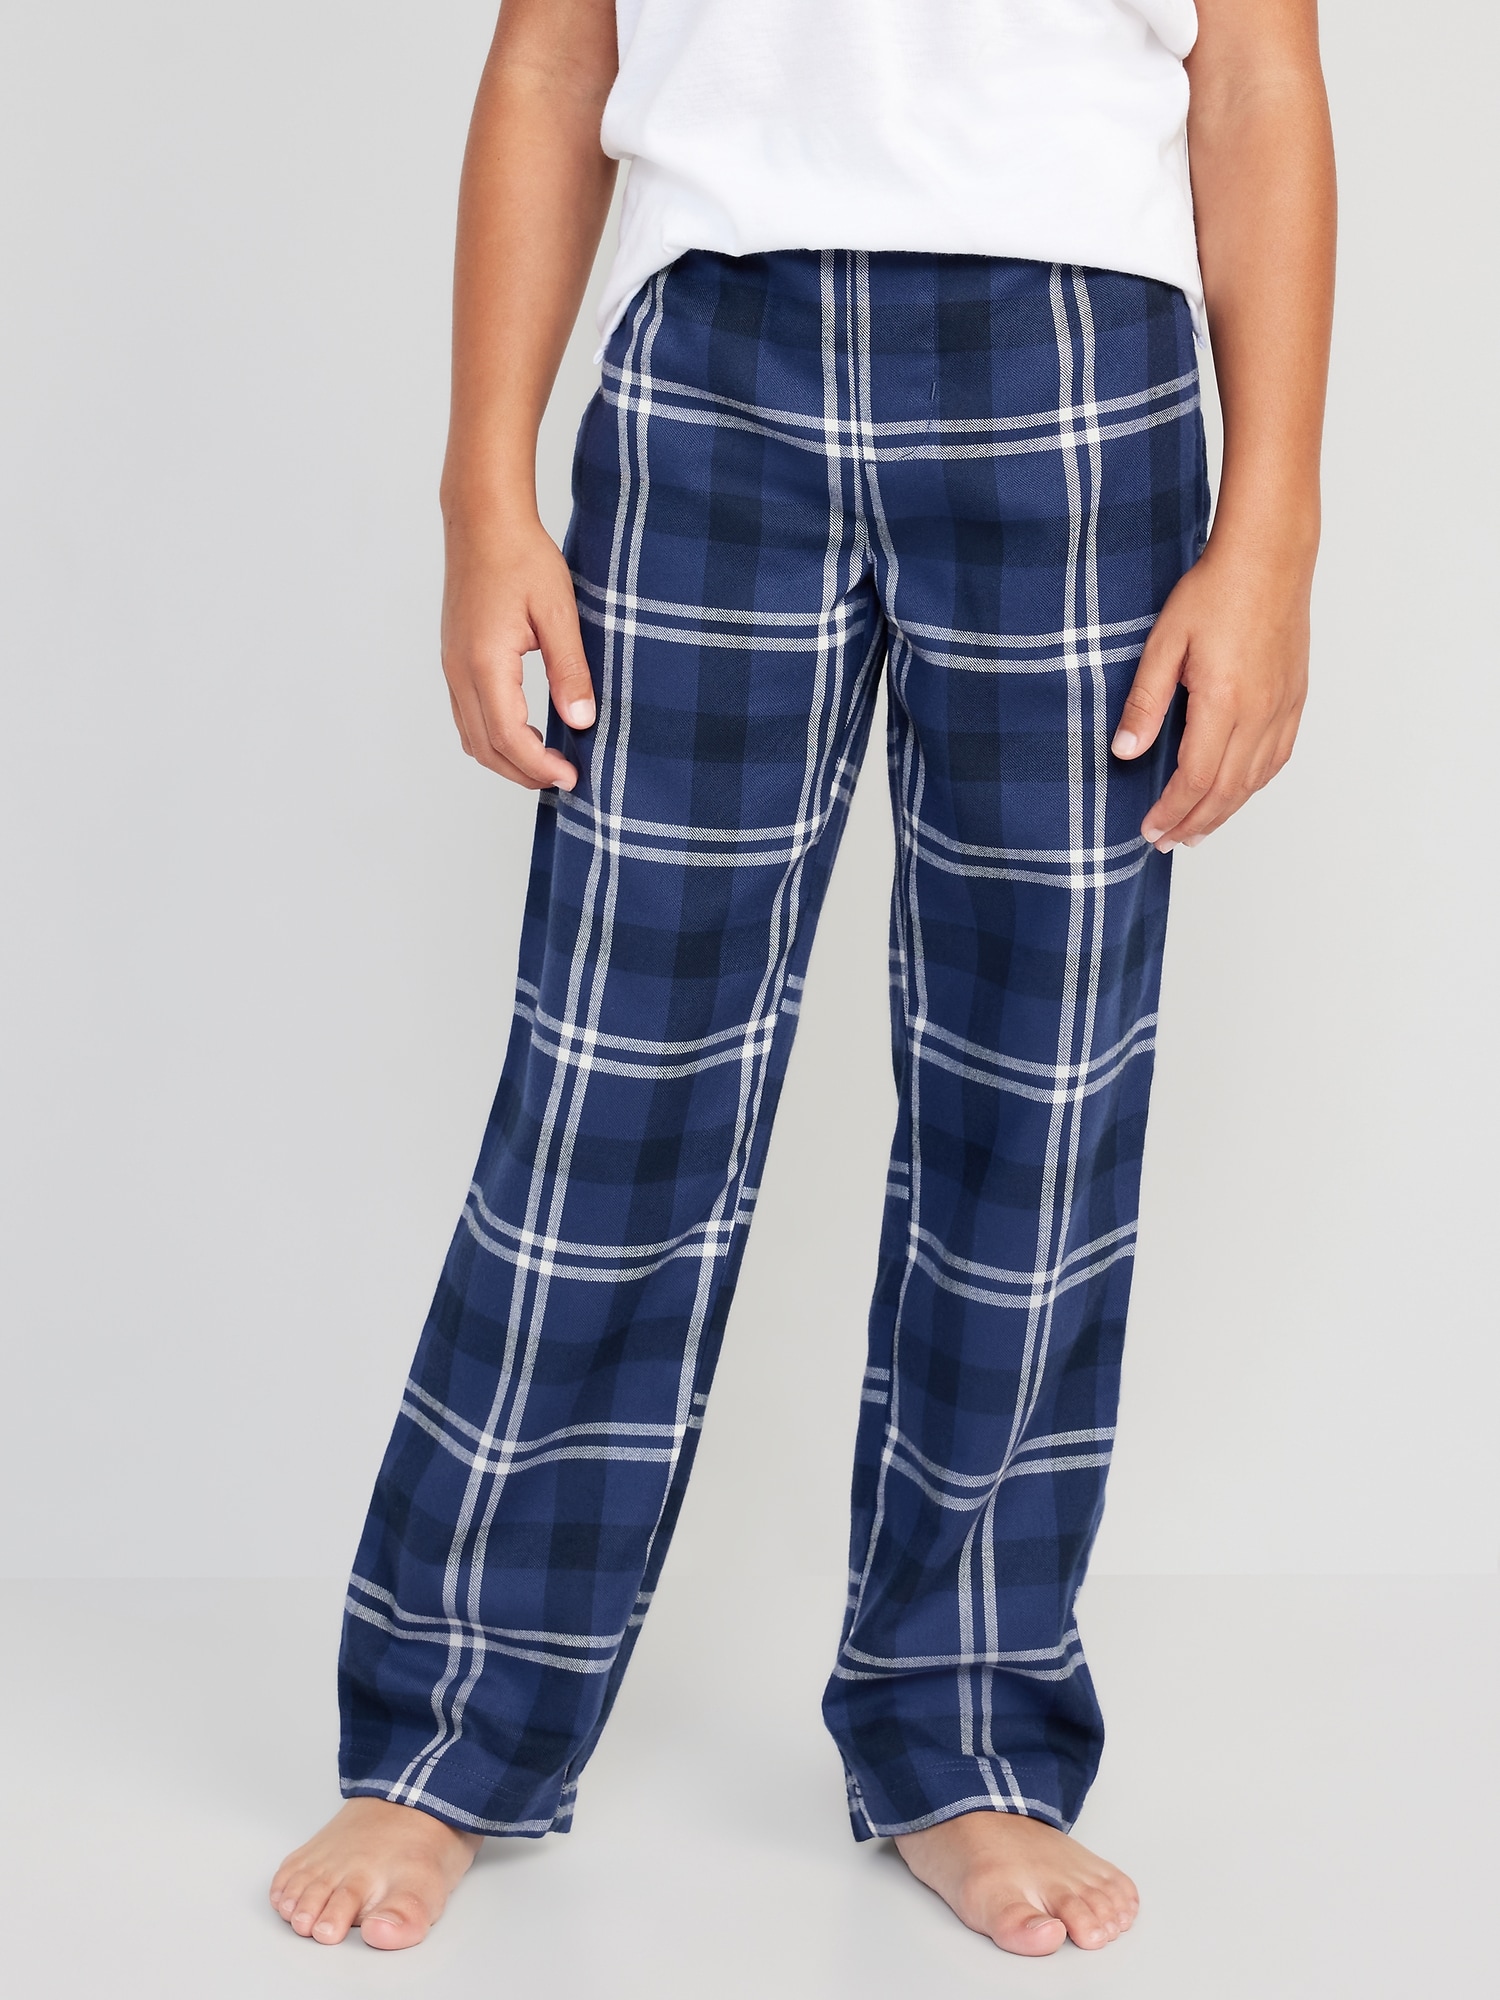 Surname Achieve Opinion blue plaid pyjama pants Adolescent Lil